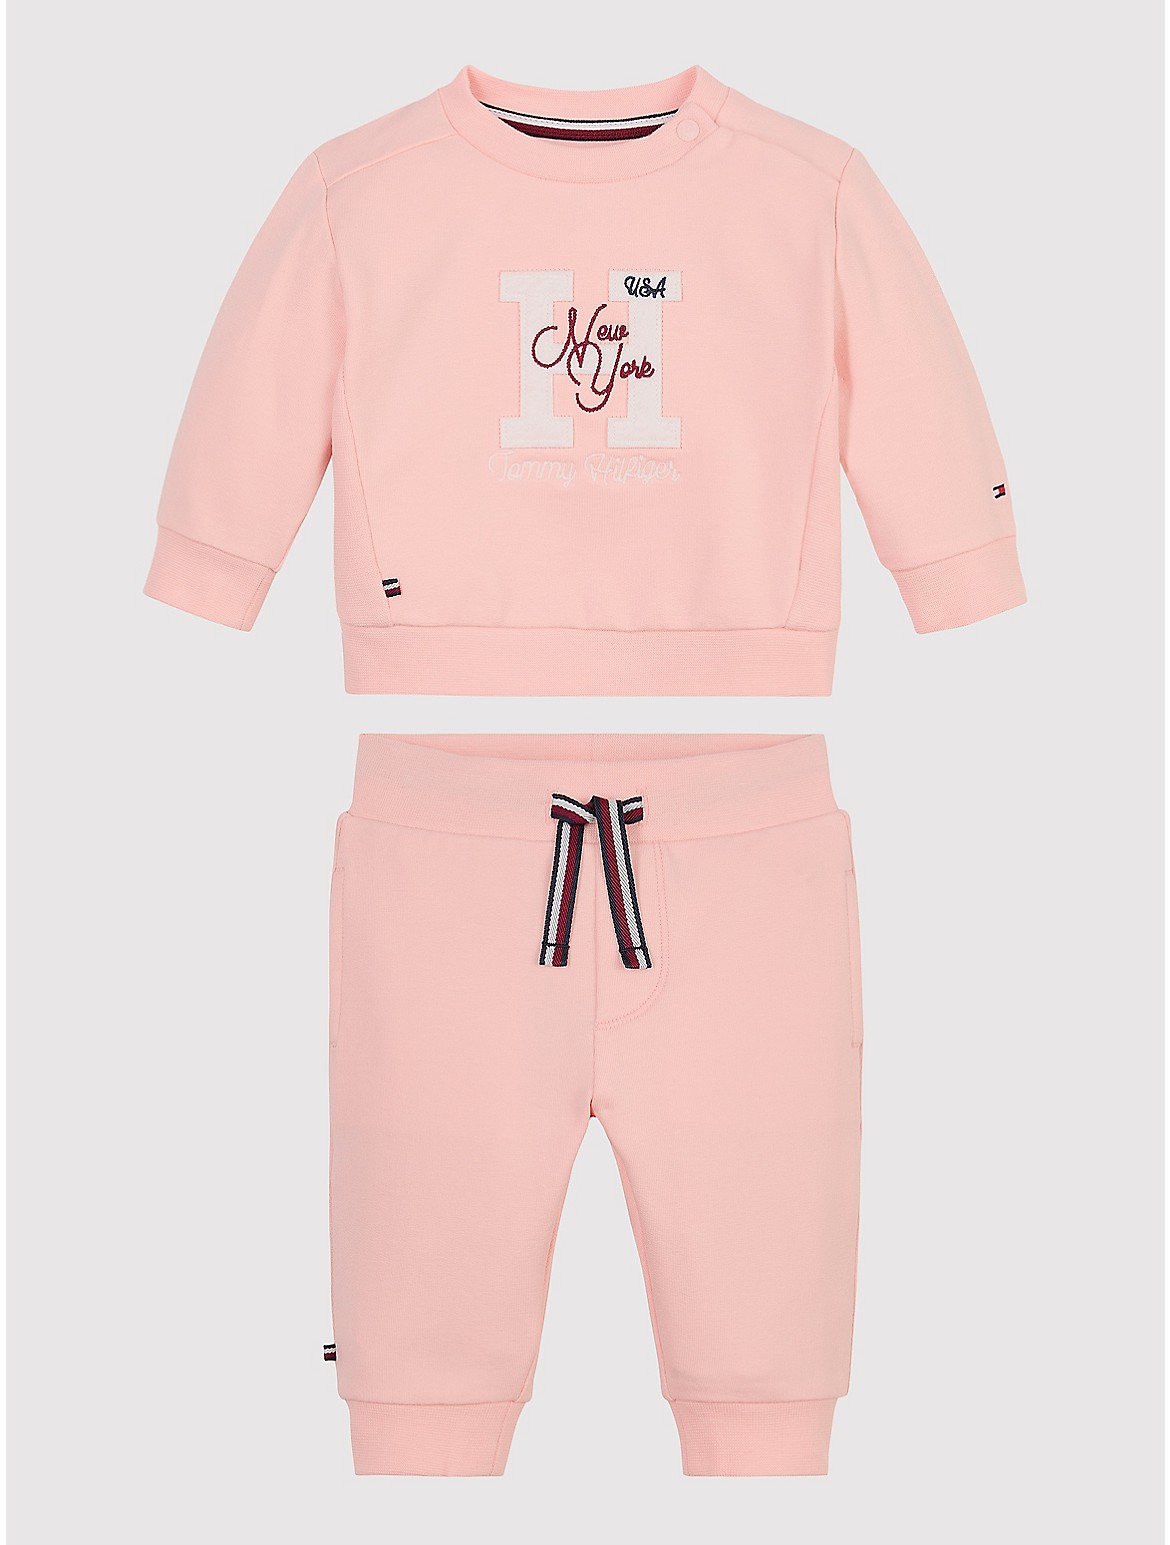 Tommy Hilfiger Babies' Blame The Cat Sweatsuit Set - Pink - 18M